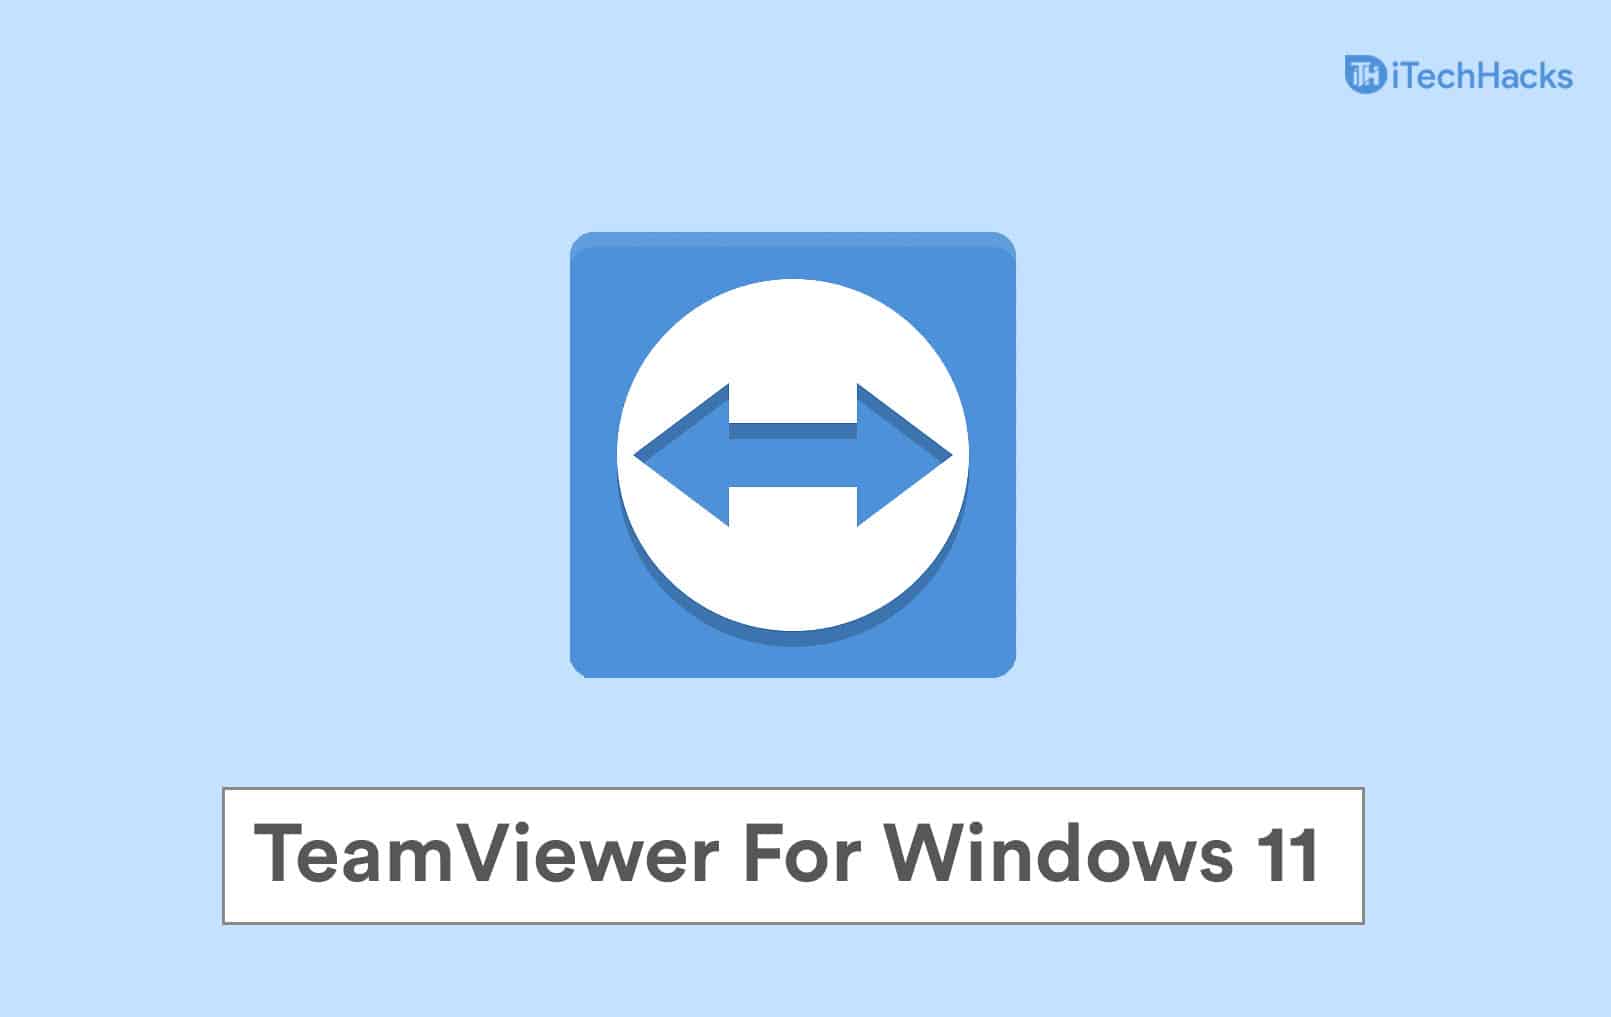 teamviewer version 11 download for windows